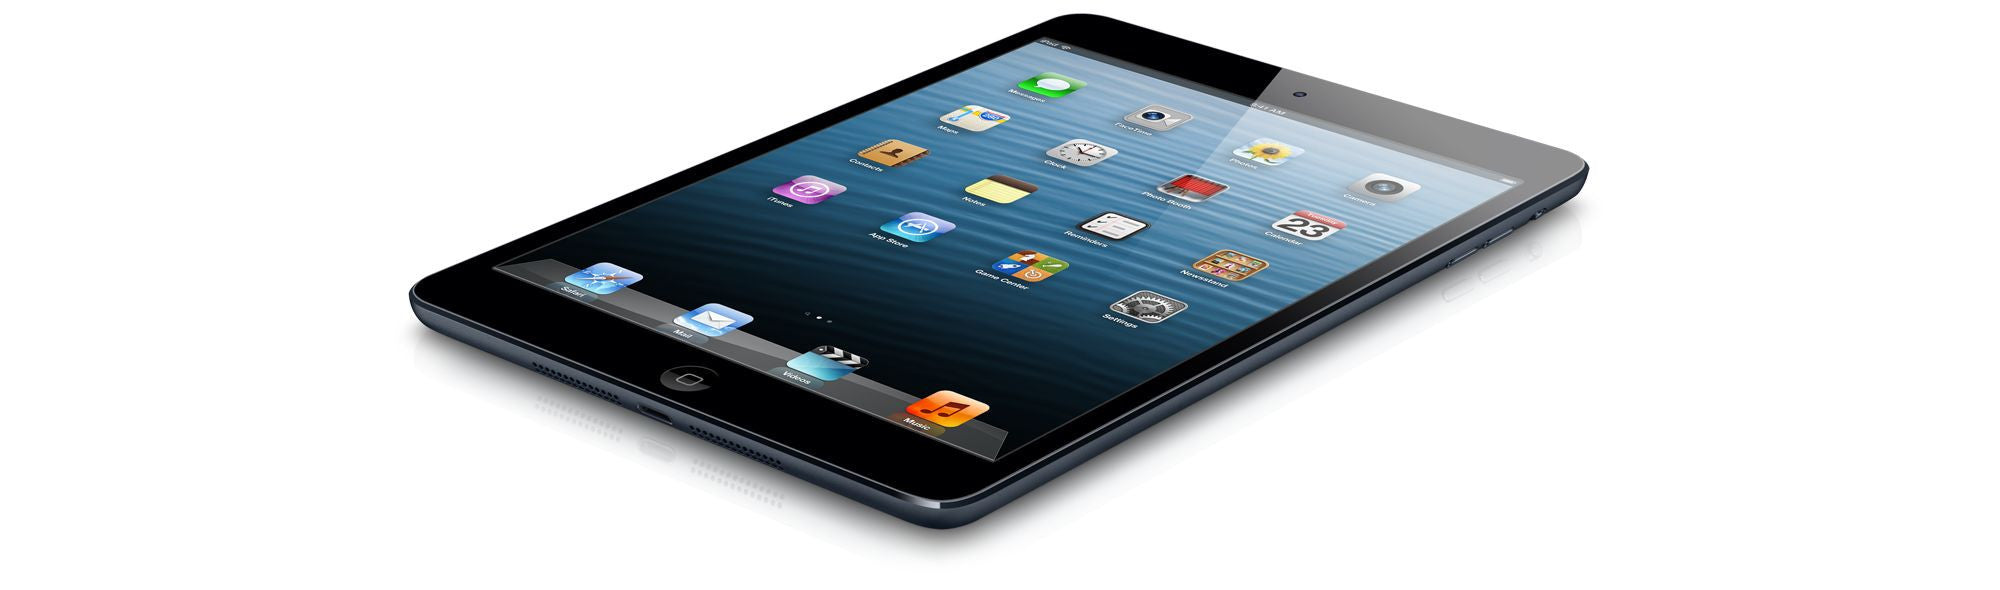 Apple iPad mini 4 (32GB